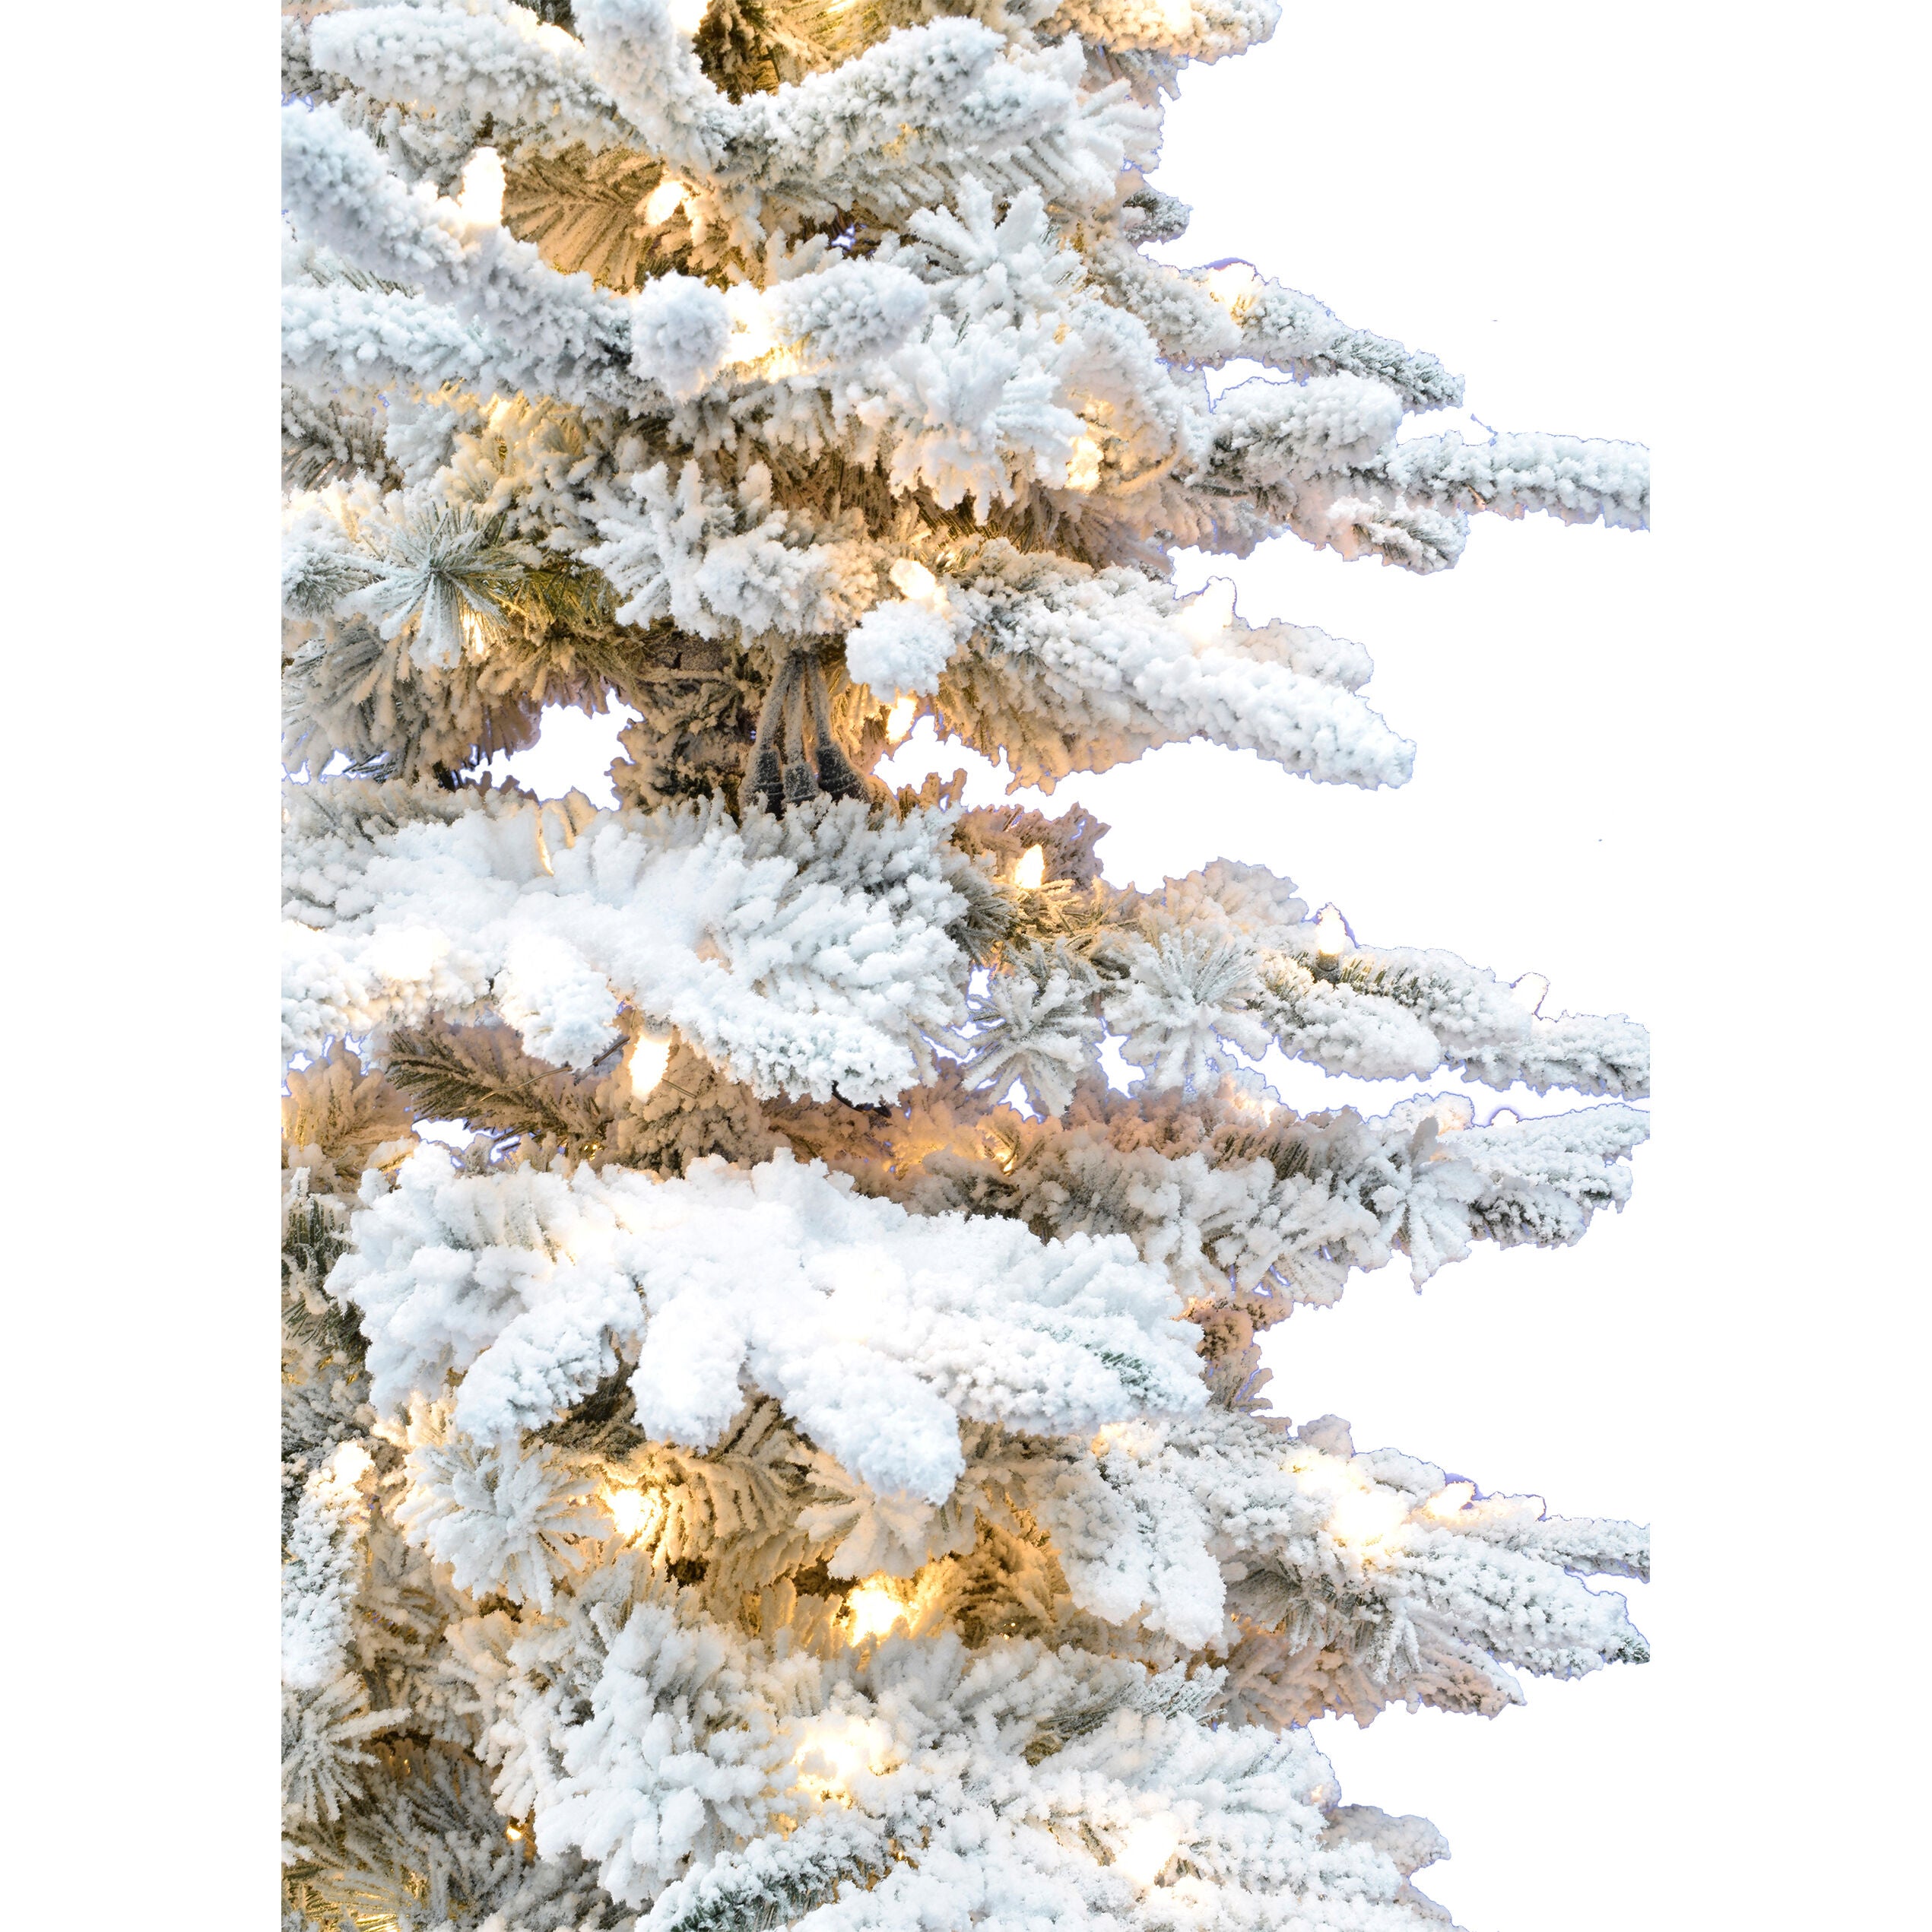 Fraser Hill Farm -  10-Ft. Flocked Mountain Pine Christmas Tree with Smart String Lighting